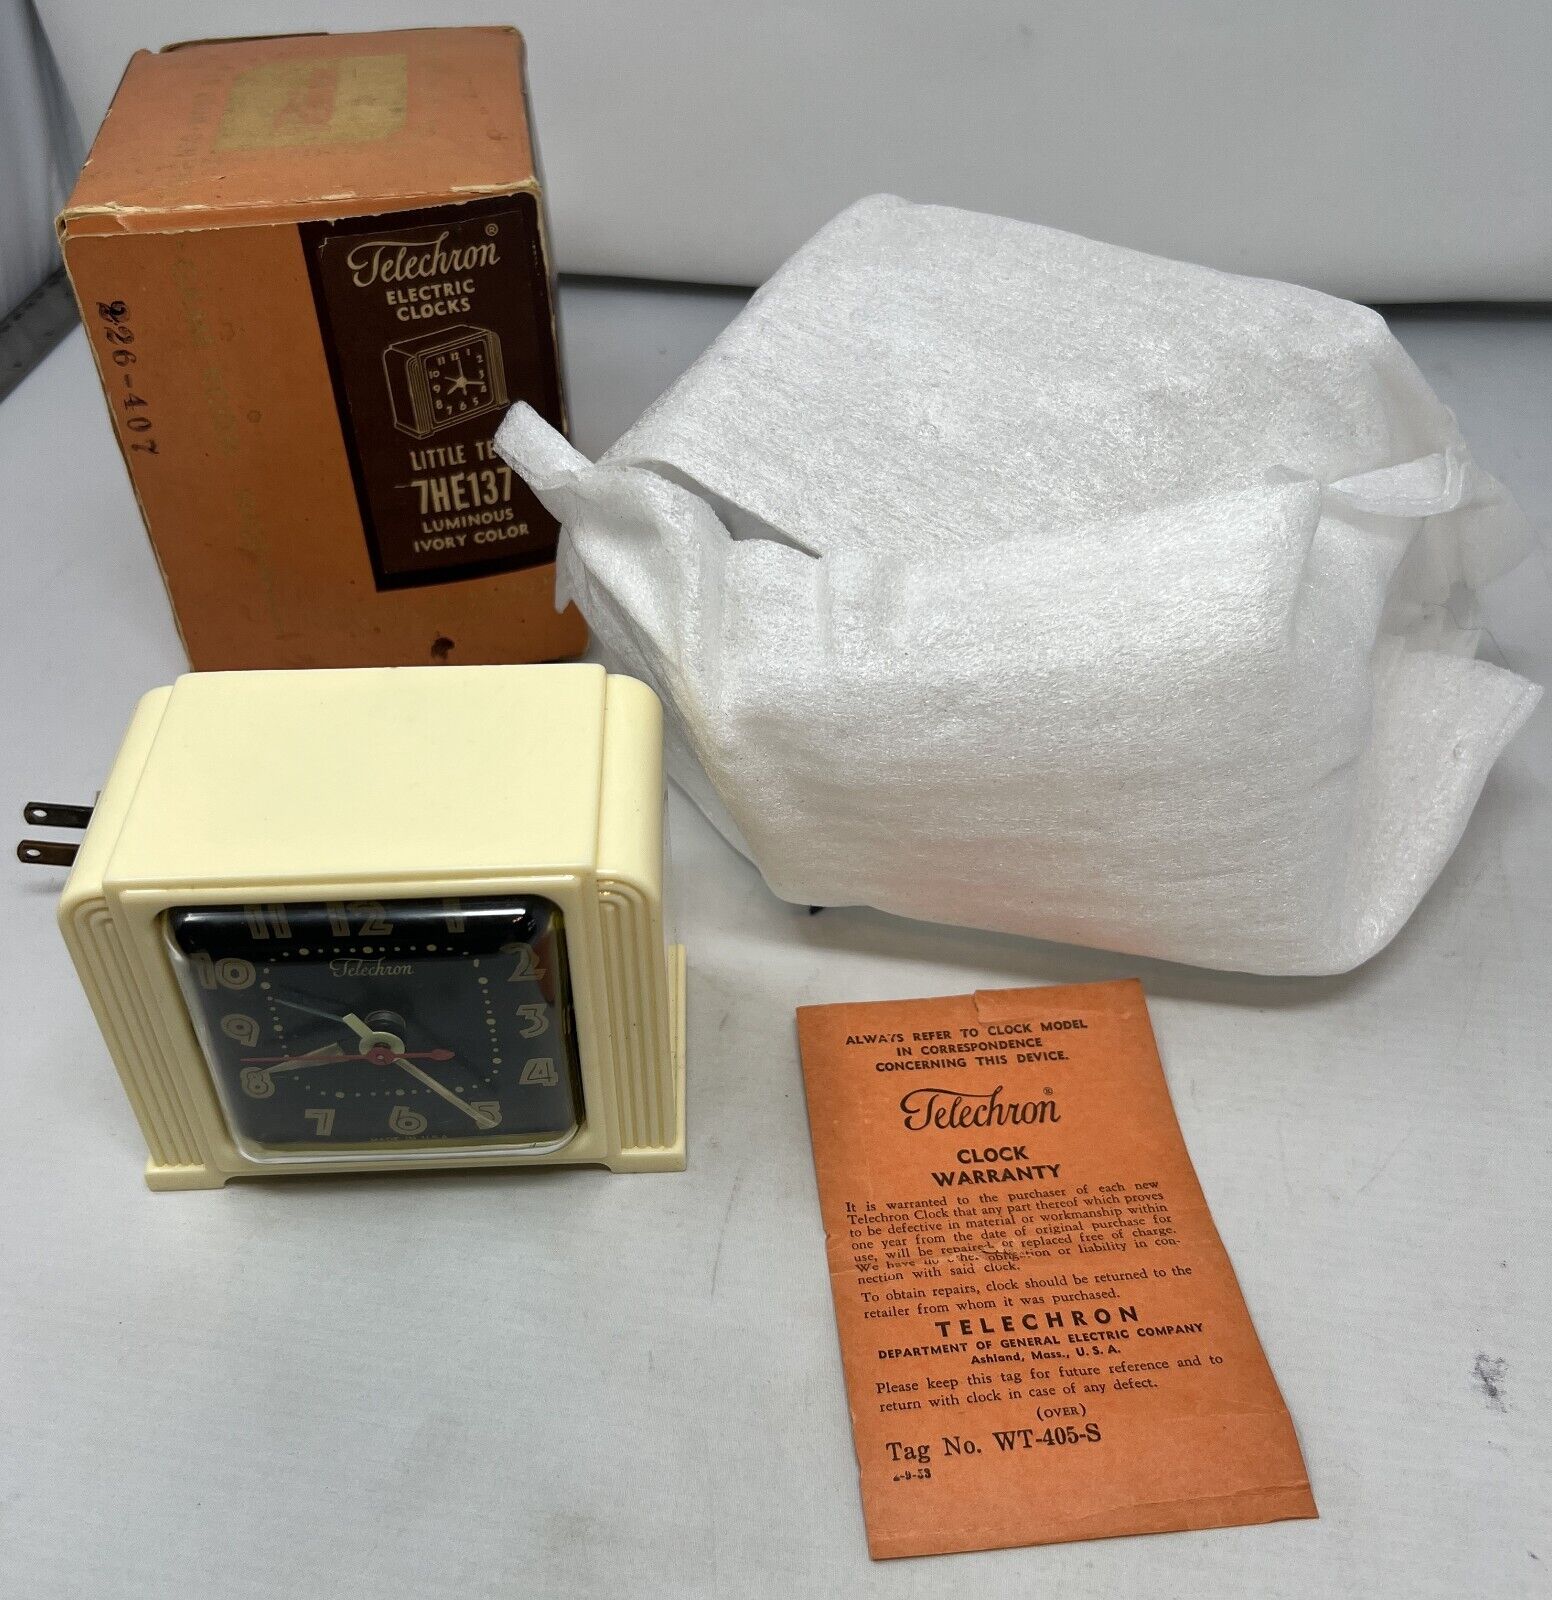 Telechron Little Tel Clock mod. #7HE137, Original Box & Warranty Card/Keeps Time